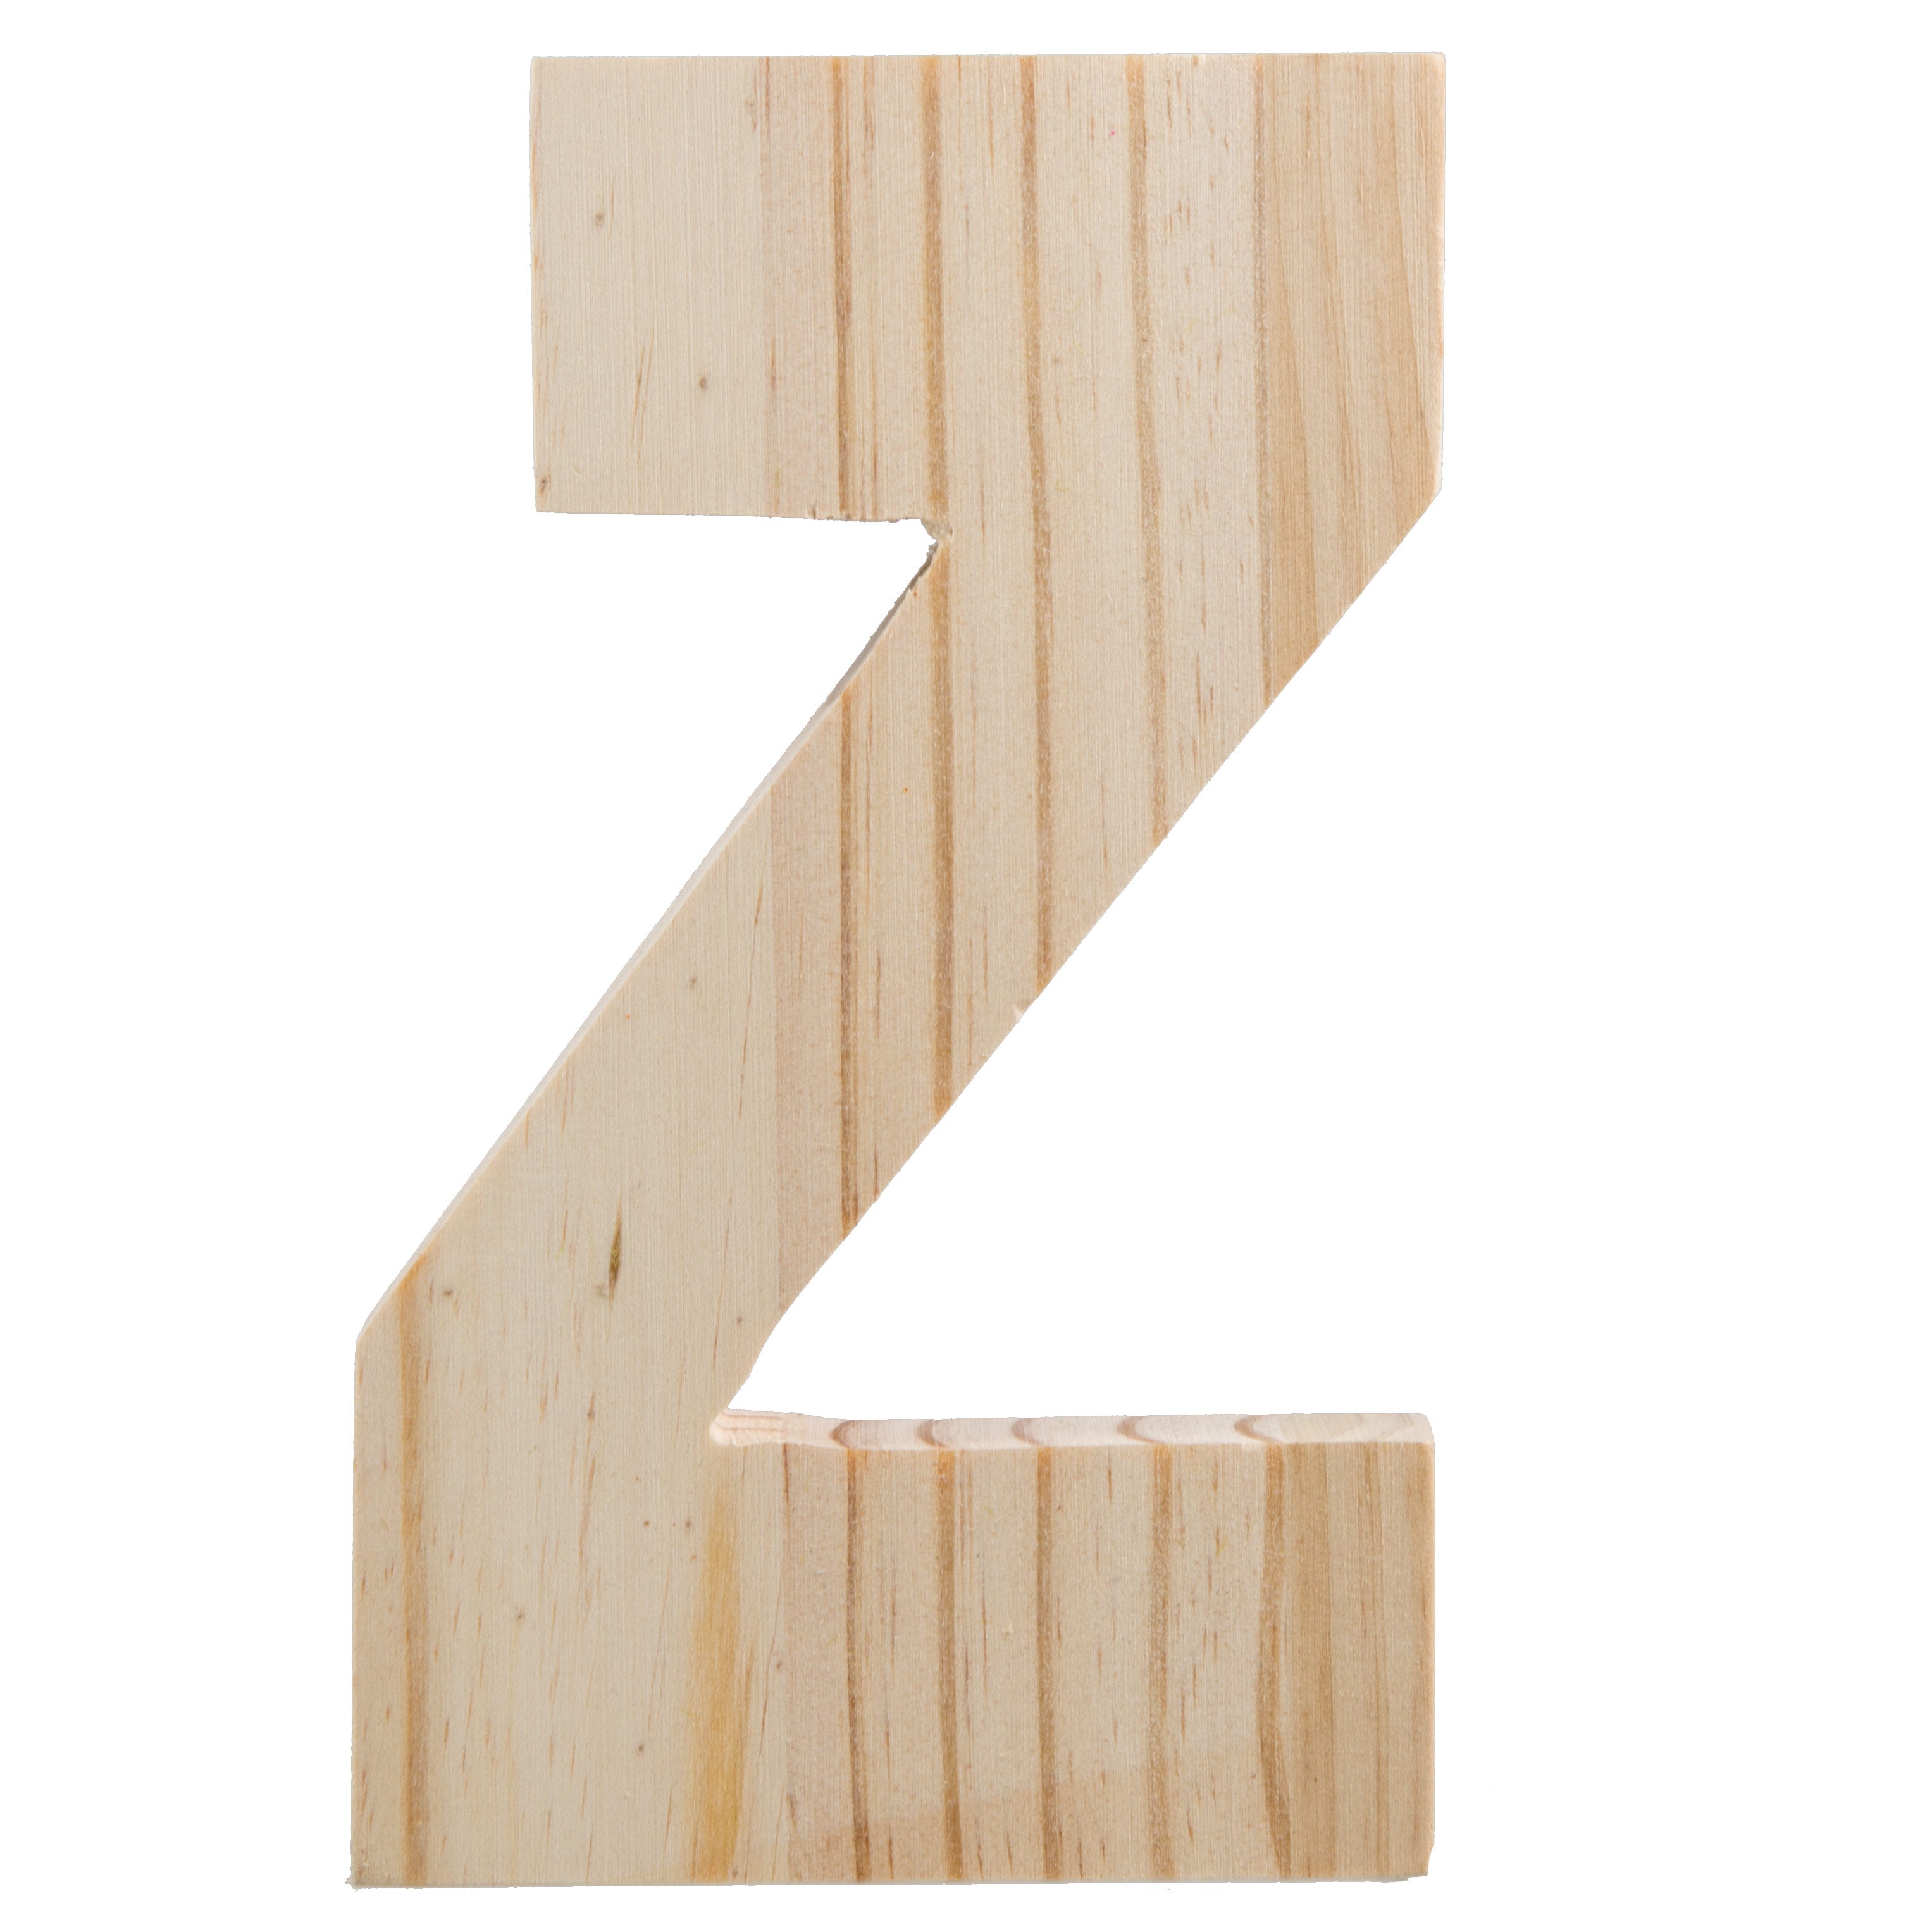 7.75" Chunky Wooden Letter: Z